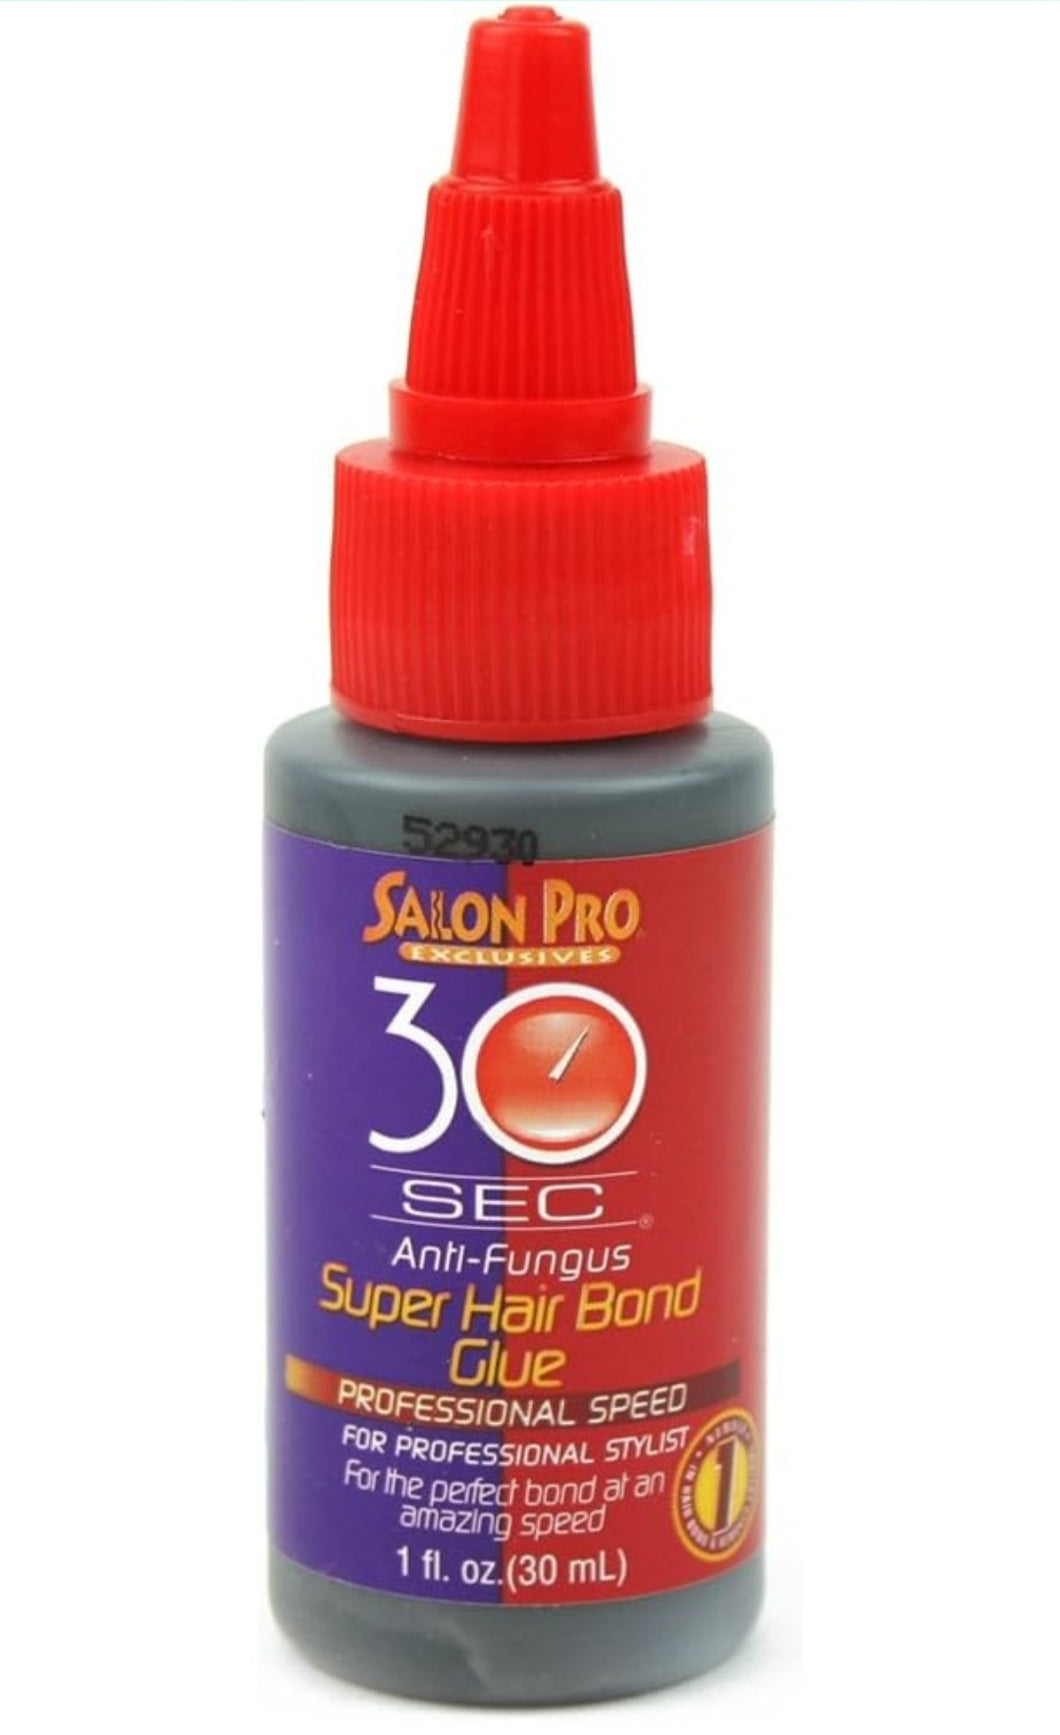 Salon Pro 30 Second Super hair black bond glue 1fl. oz